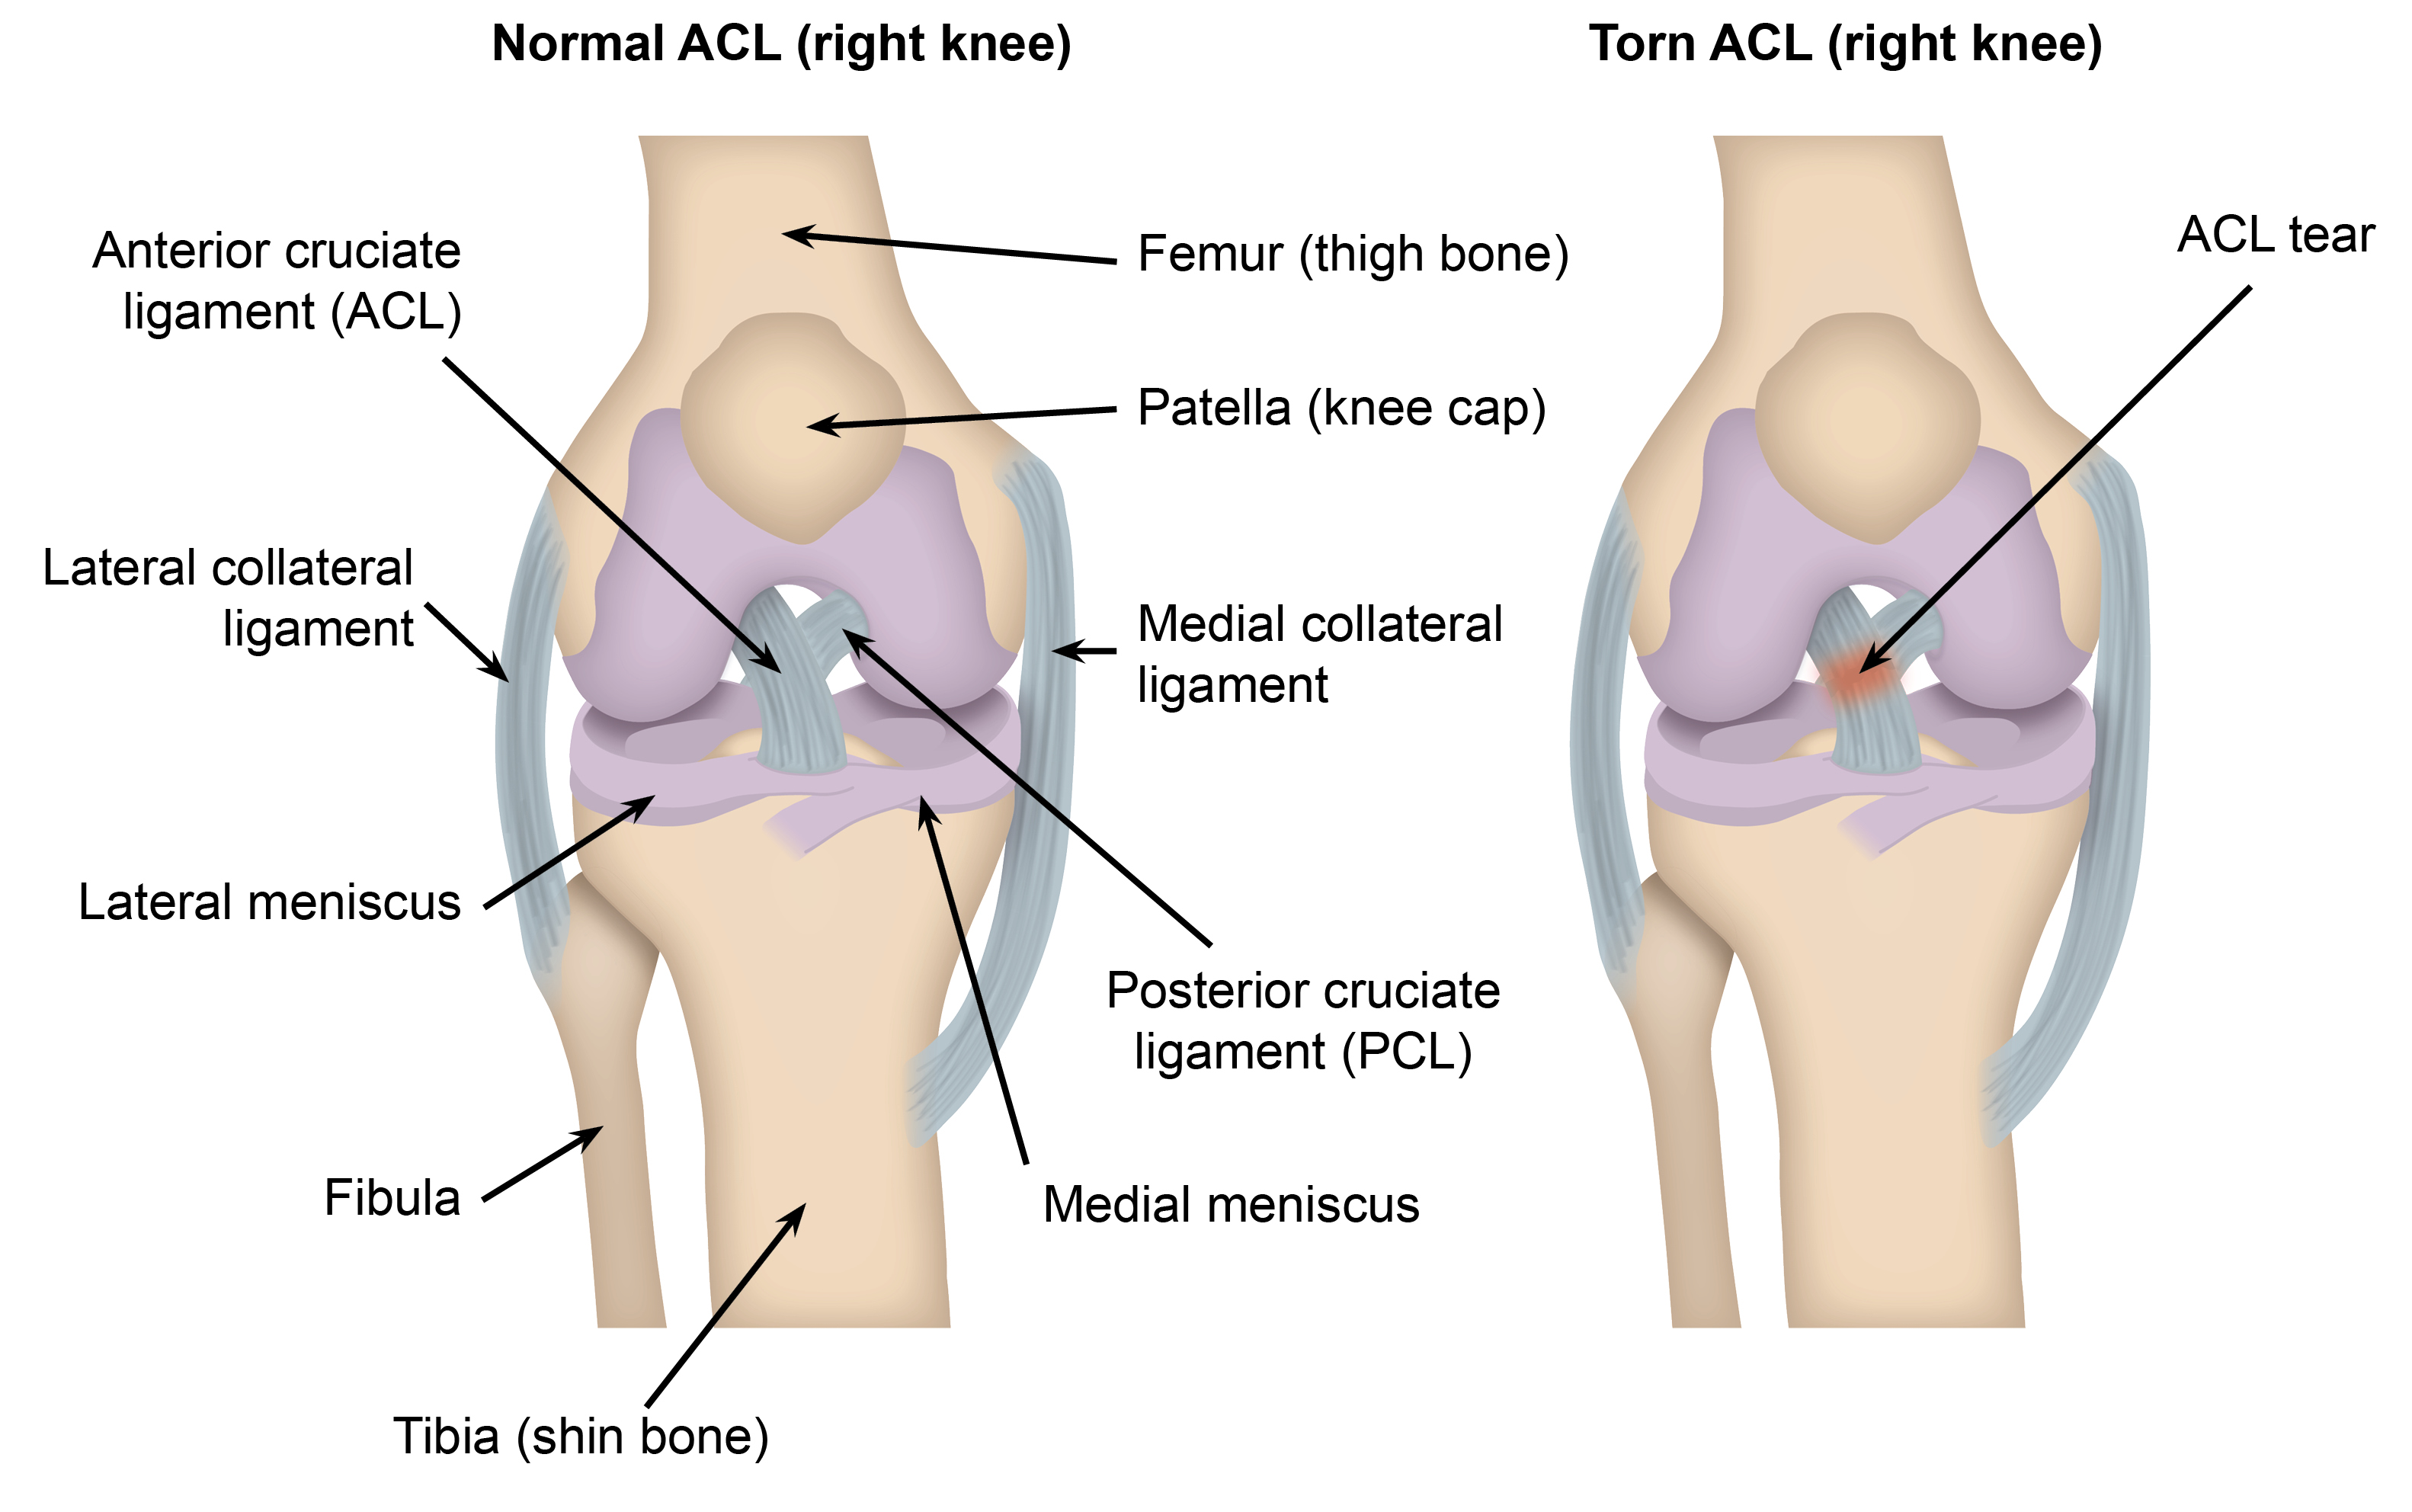 A normal anterior cruciate ligament, compared to a torn anterior cruciate ligament